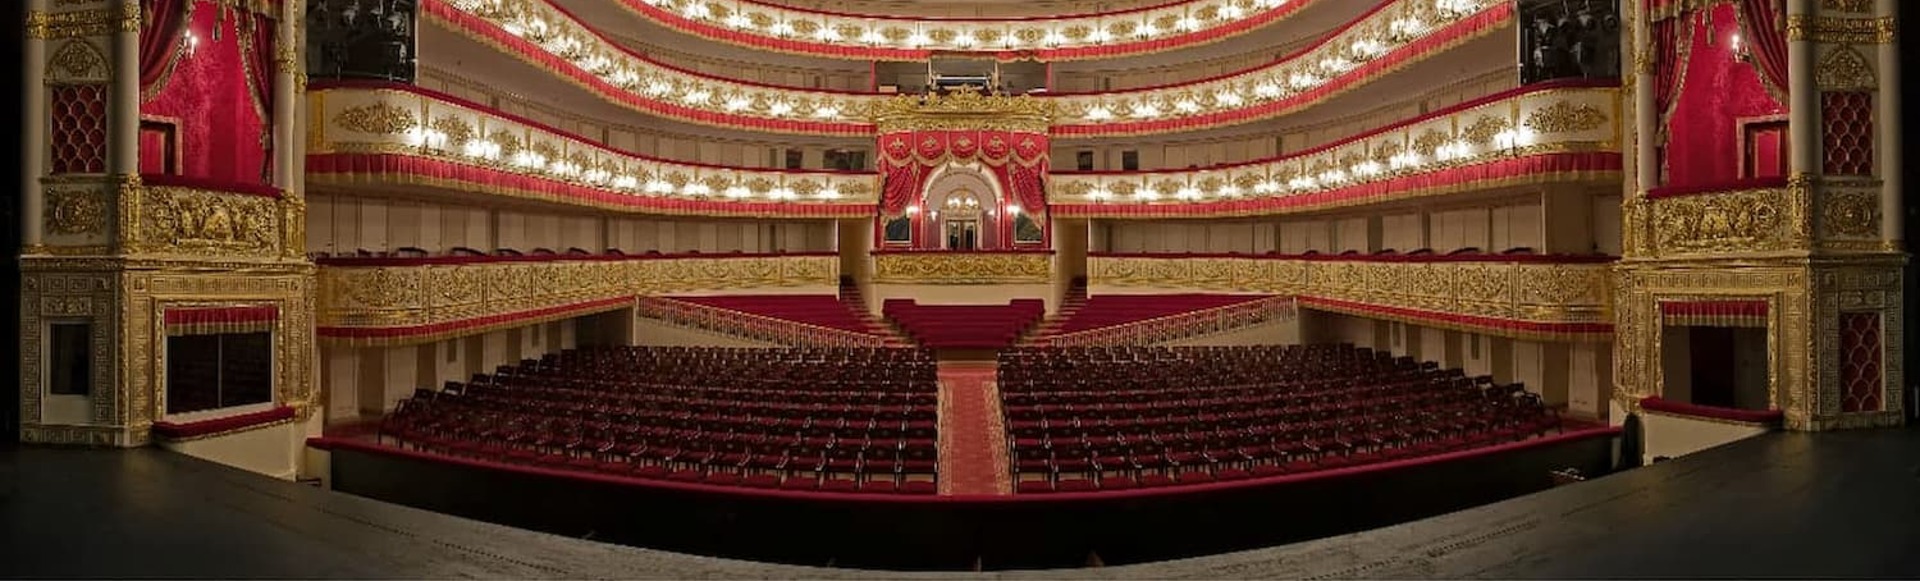 сцена александринского театра схема зала с местами